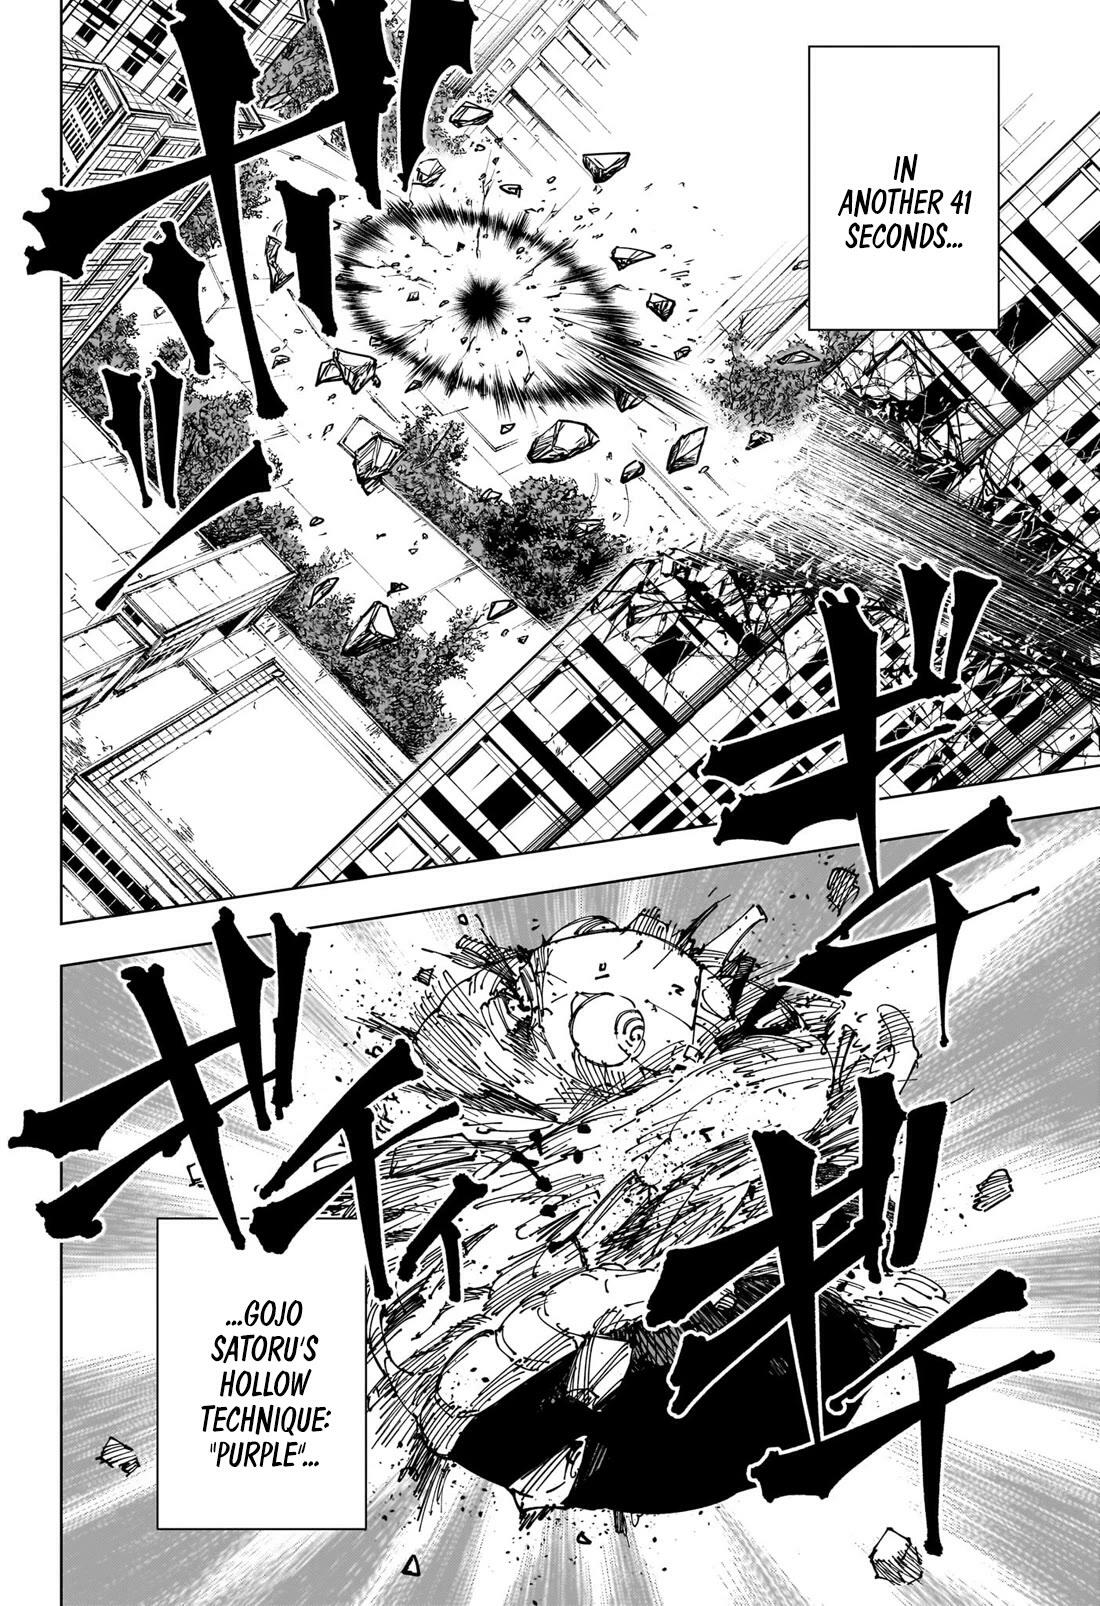 Jujutsu Kaisen Chapter 234: The Decisive Battle In The Uninhabited, Demon-Infested Shinjuku ⑫ page 18 - Mangakakalot